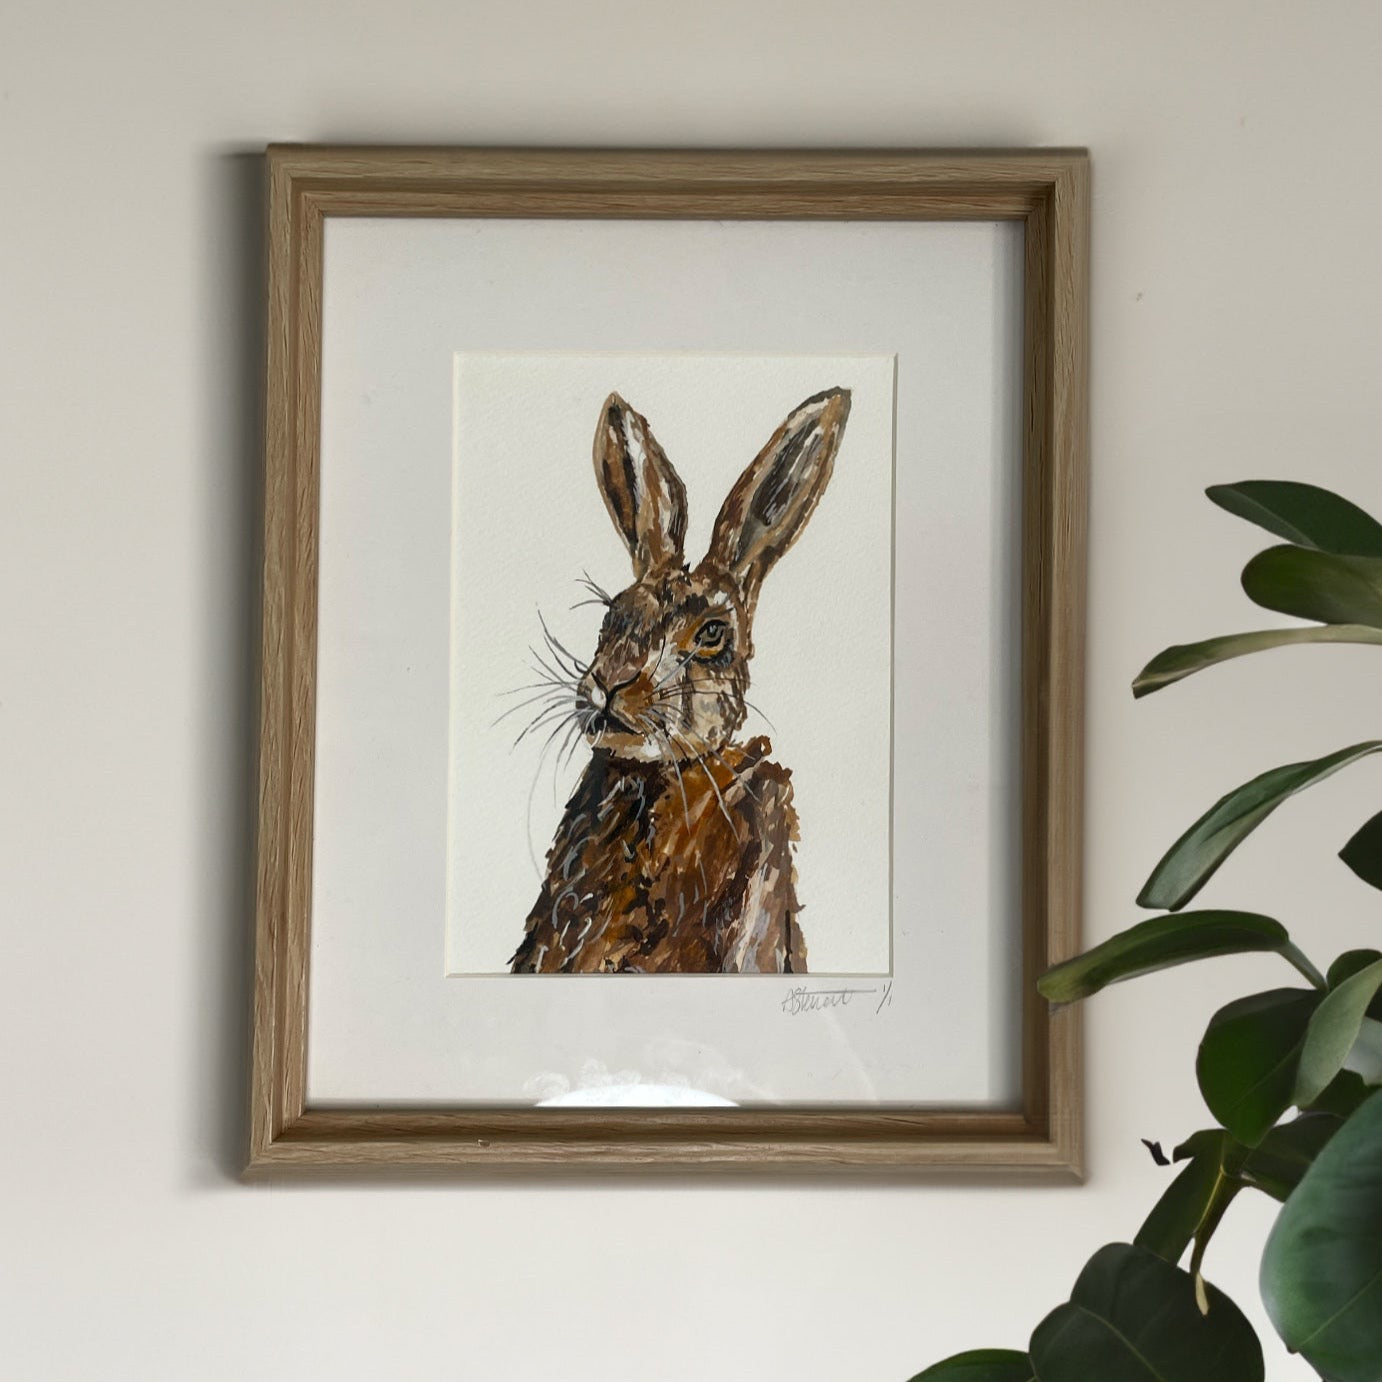 Framed Original Watercolour Hare Illustration.